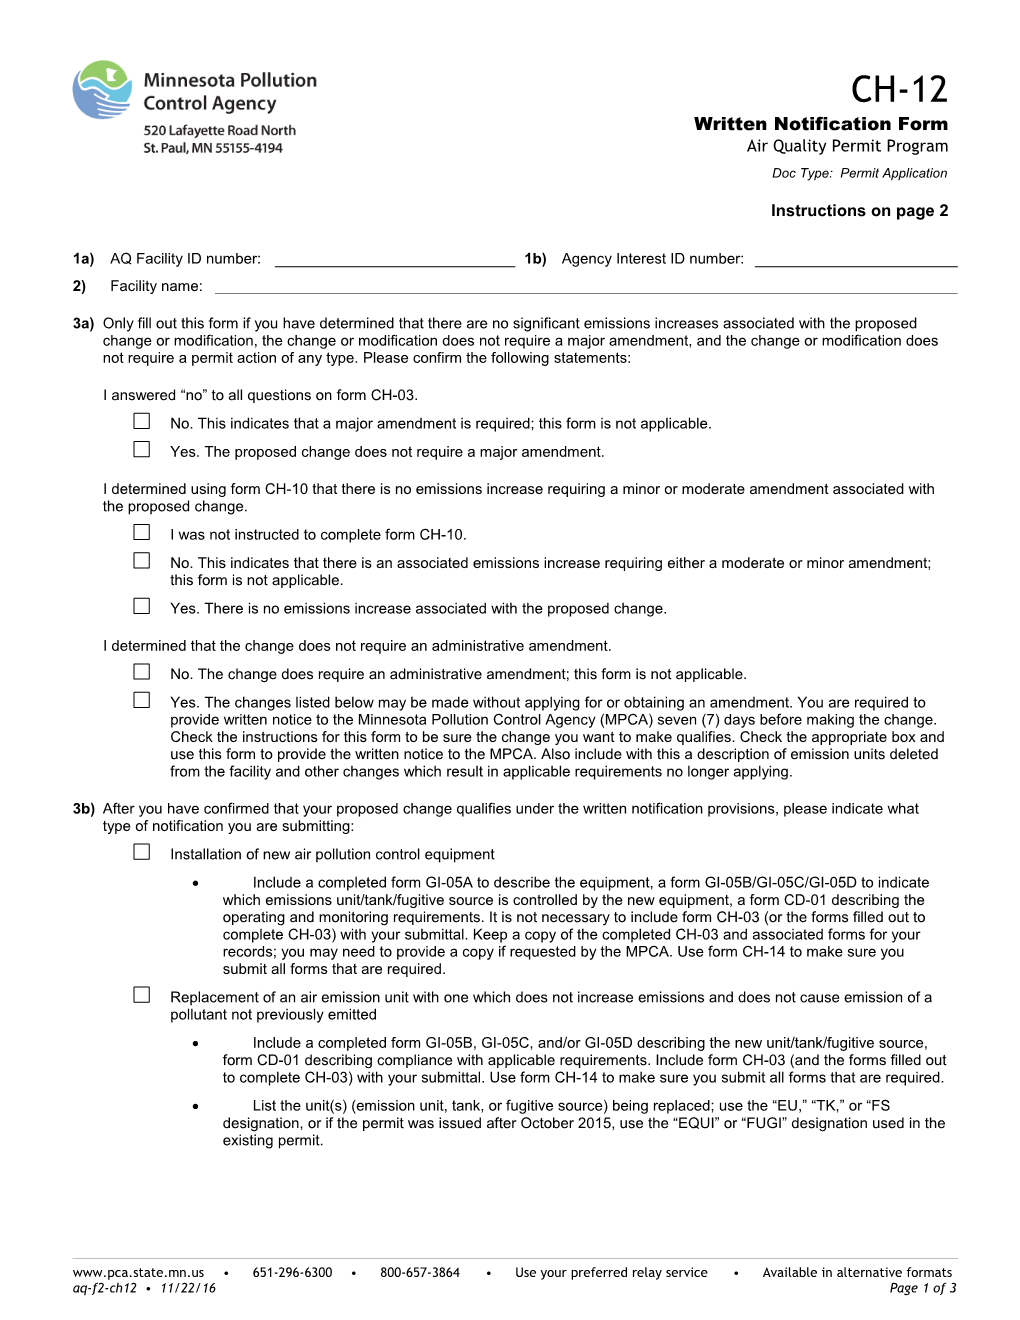 CH-12 Written Notification Form Air Quality Permit Program - Form